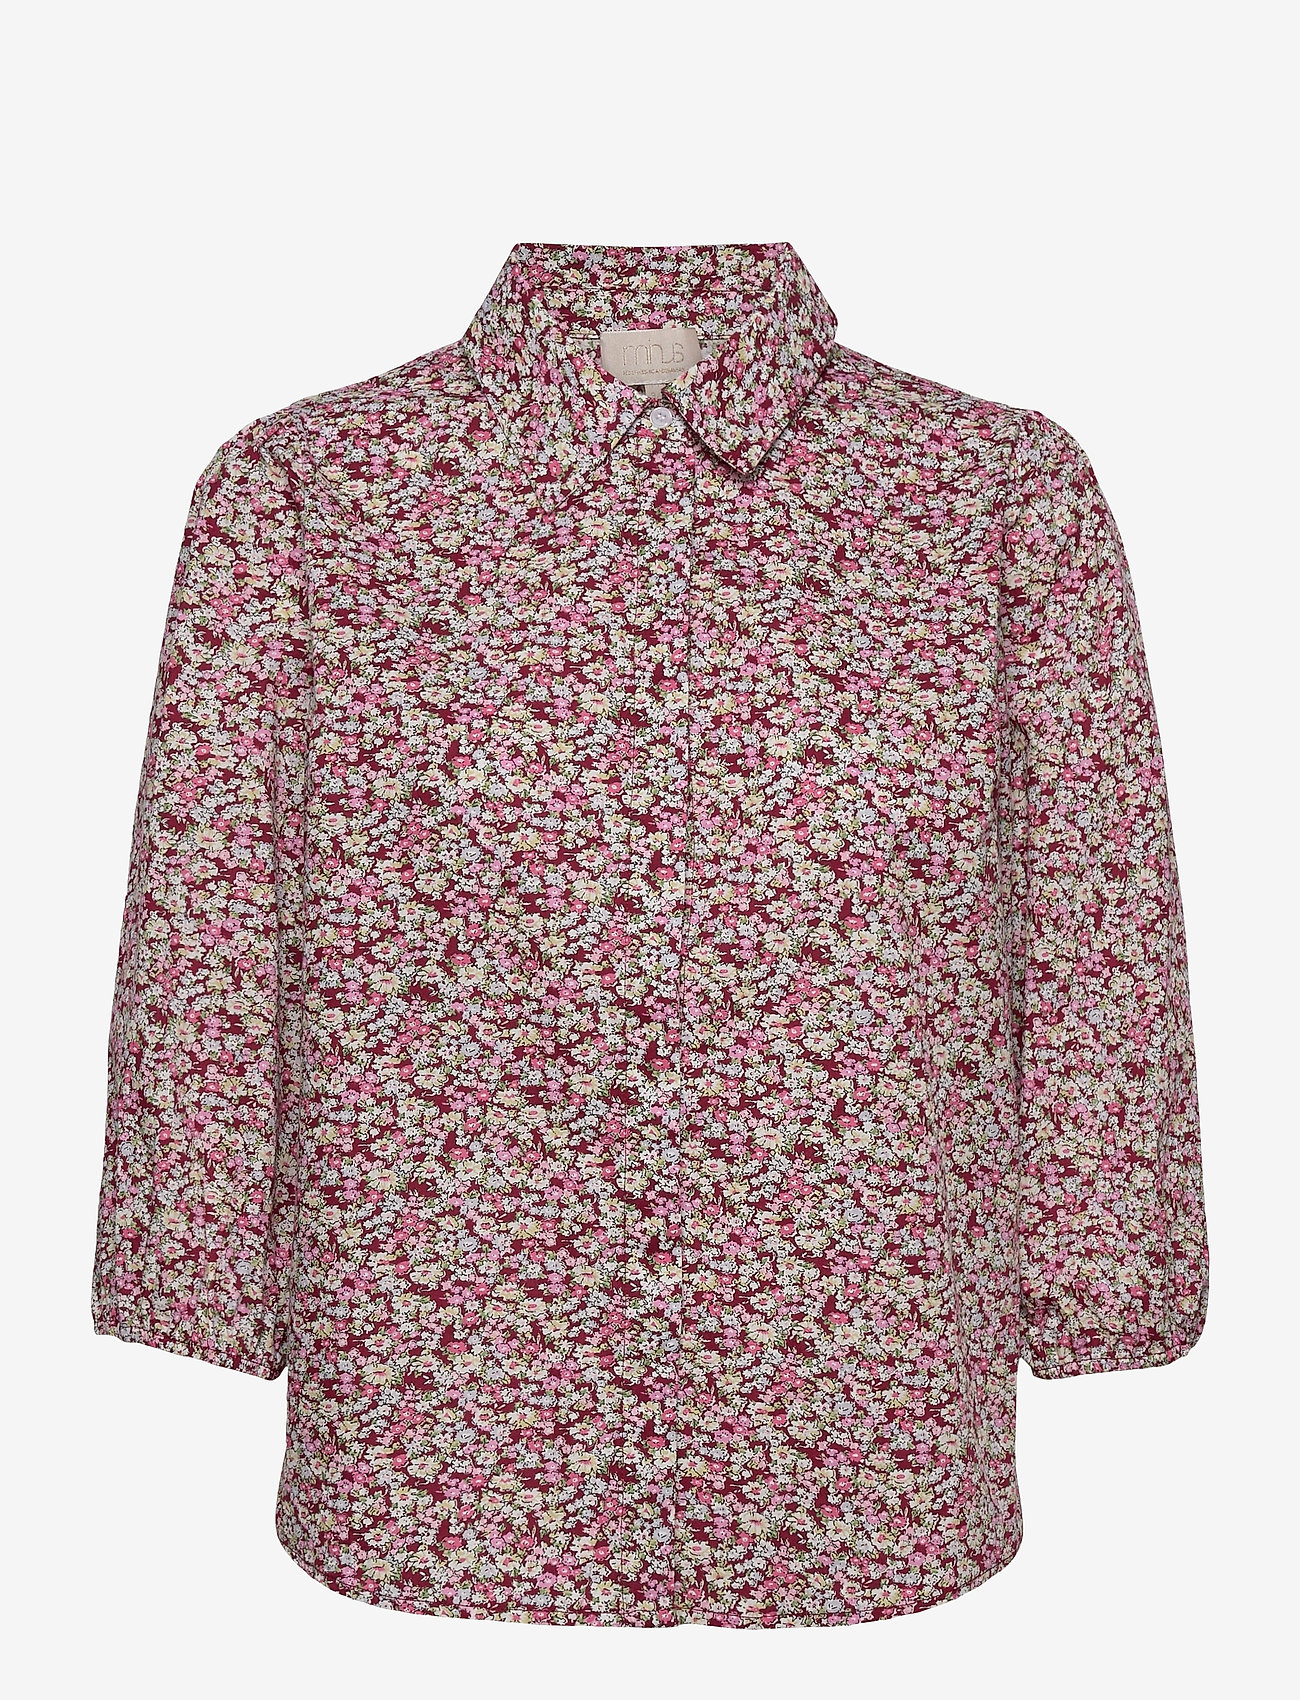 Minus - Rasmina shirt - långärmade skjortor - pink flower print - 0